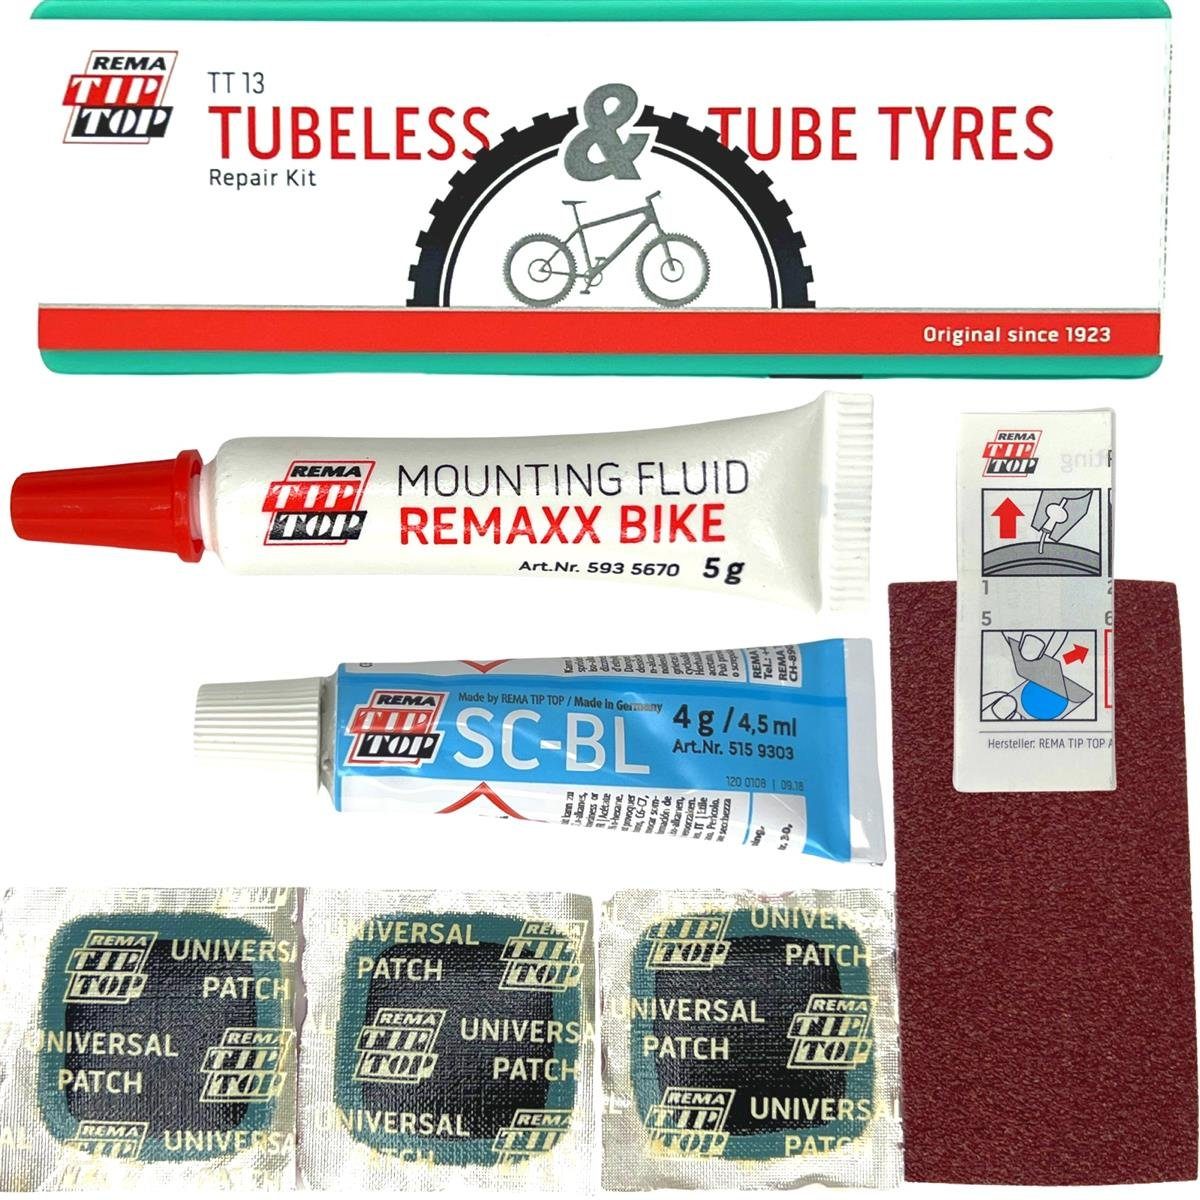 Rema Tip-Top Fahrrad-Montageständer Rema Tip Top Reparatur Set Tubeless & Tube Tyres (Schlauchlos) TT13